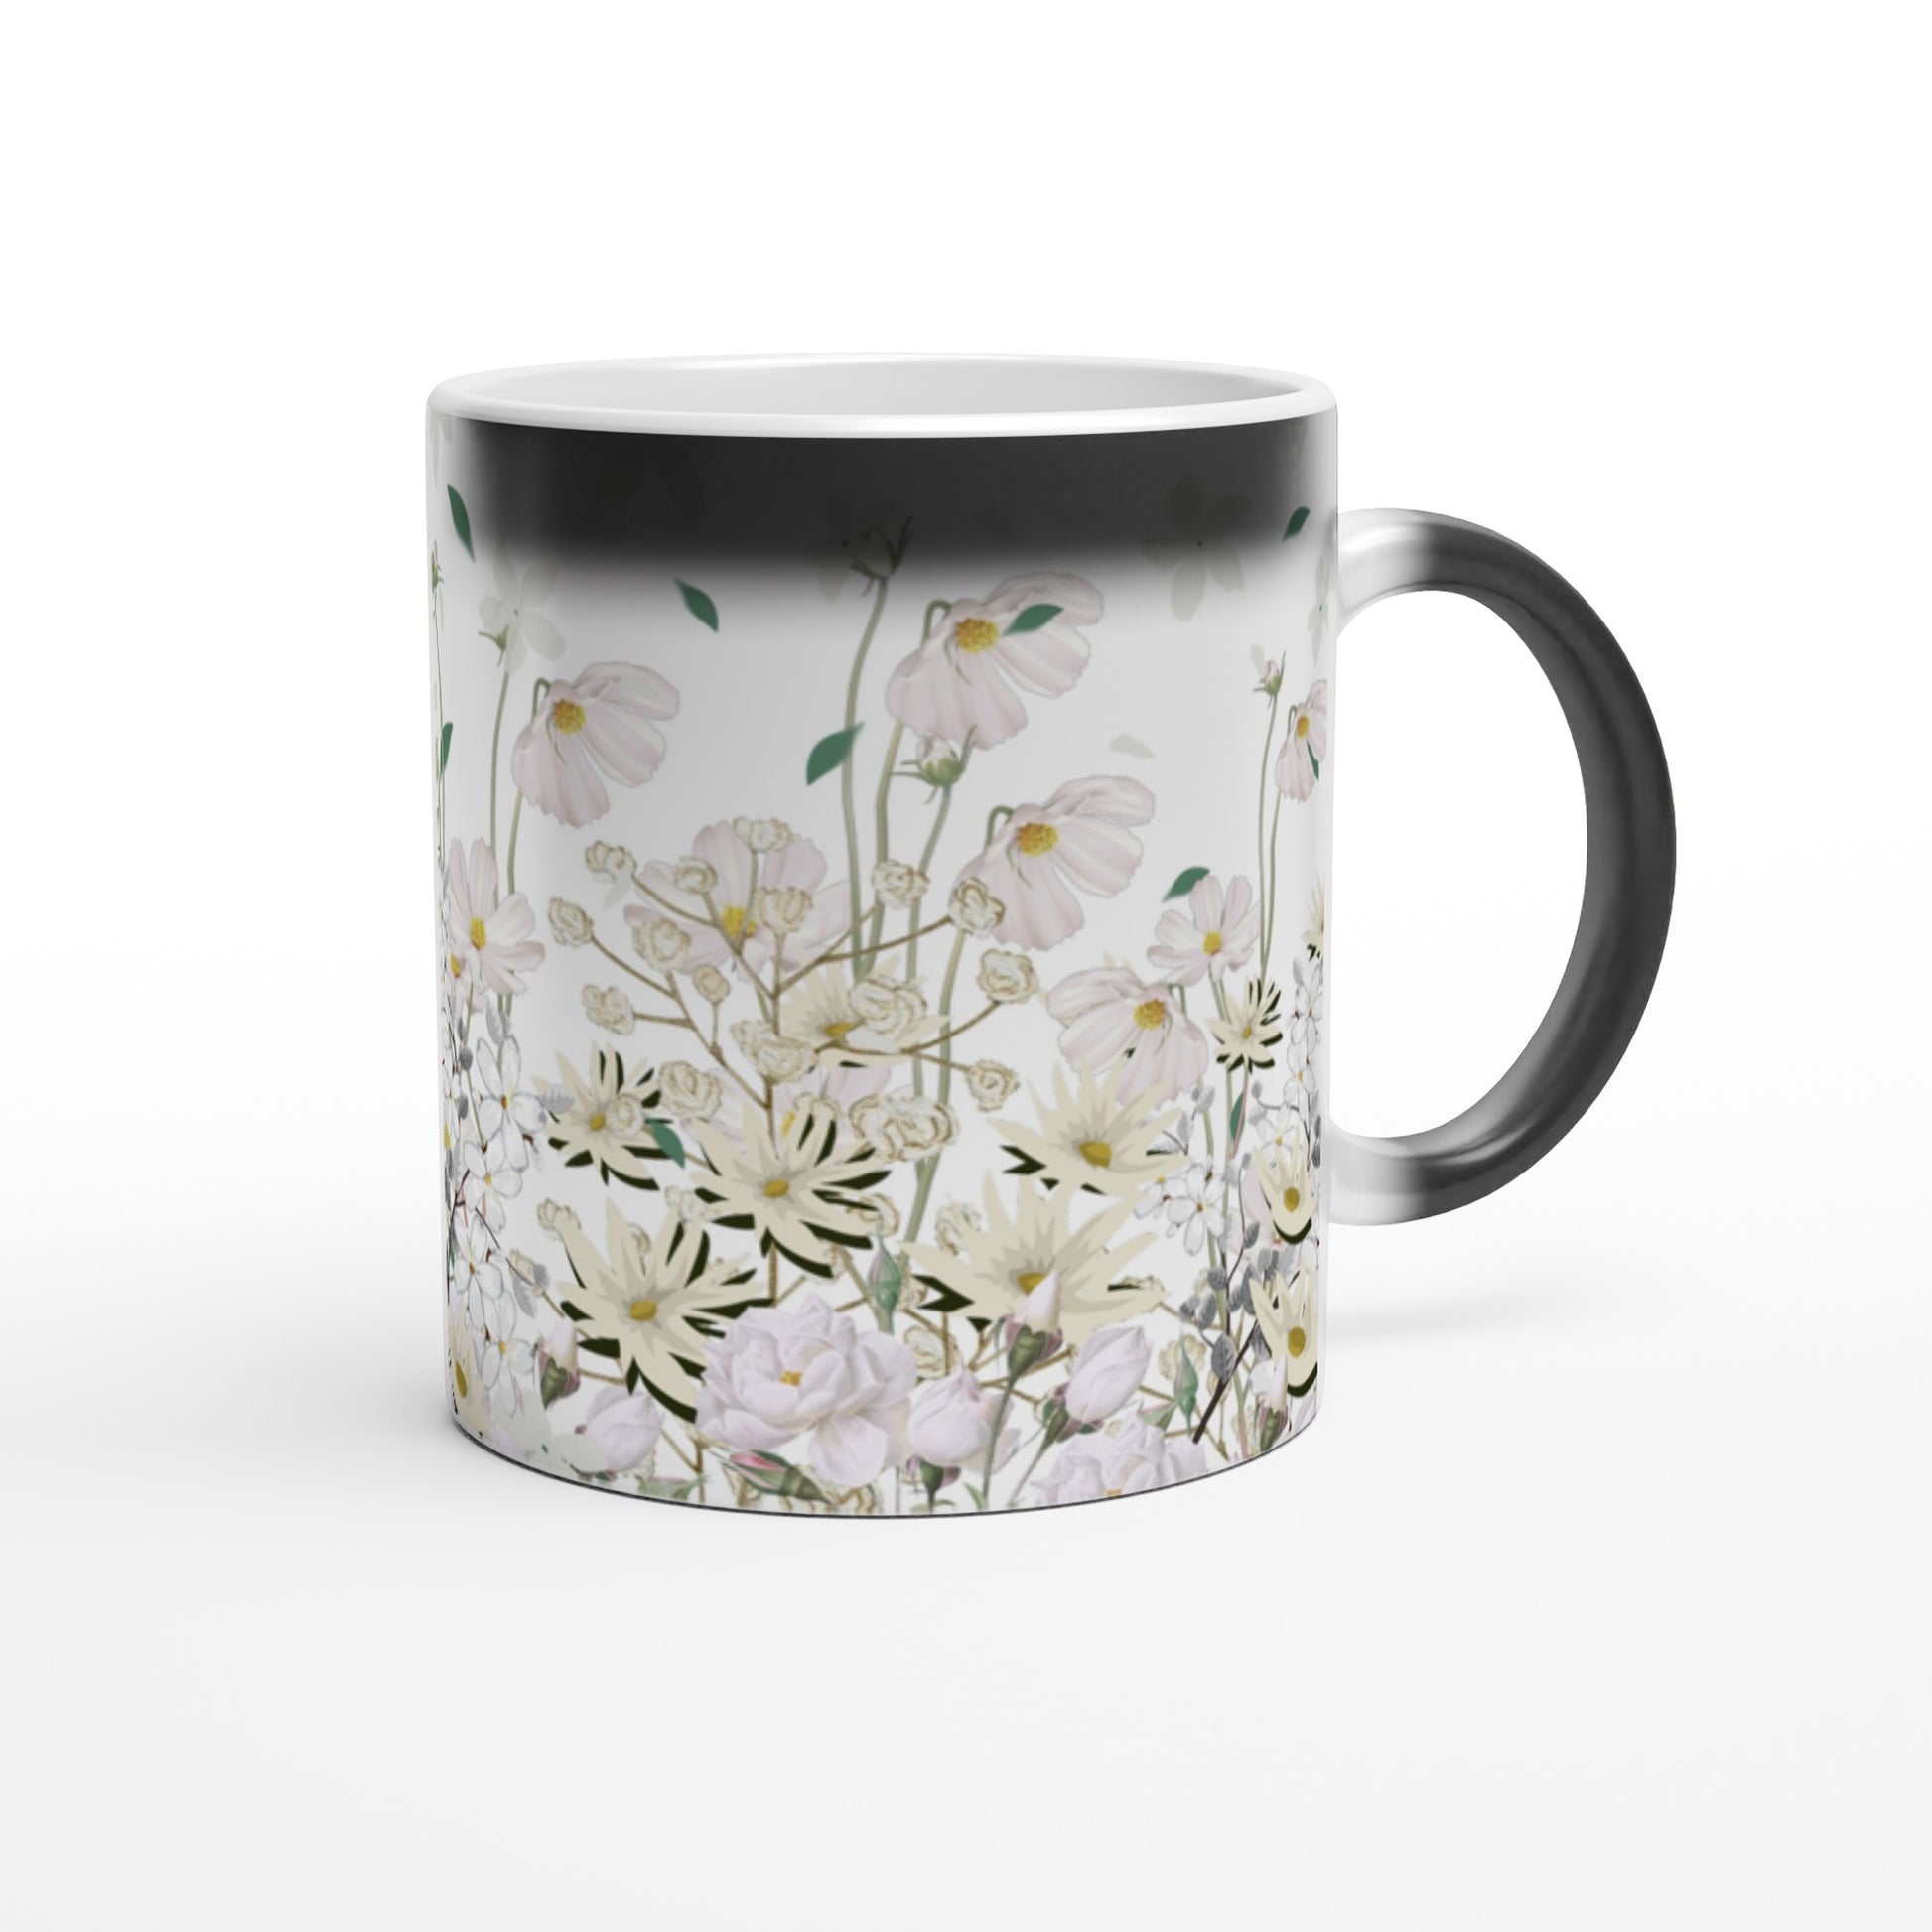 Diseño de flores blancas en taza de café mágica